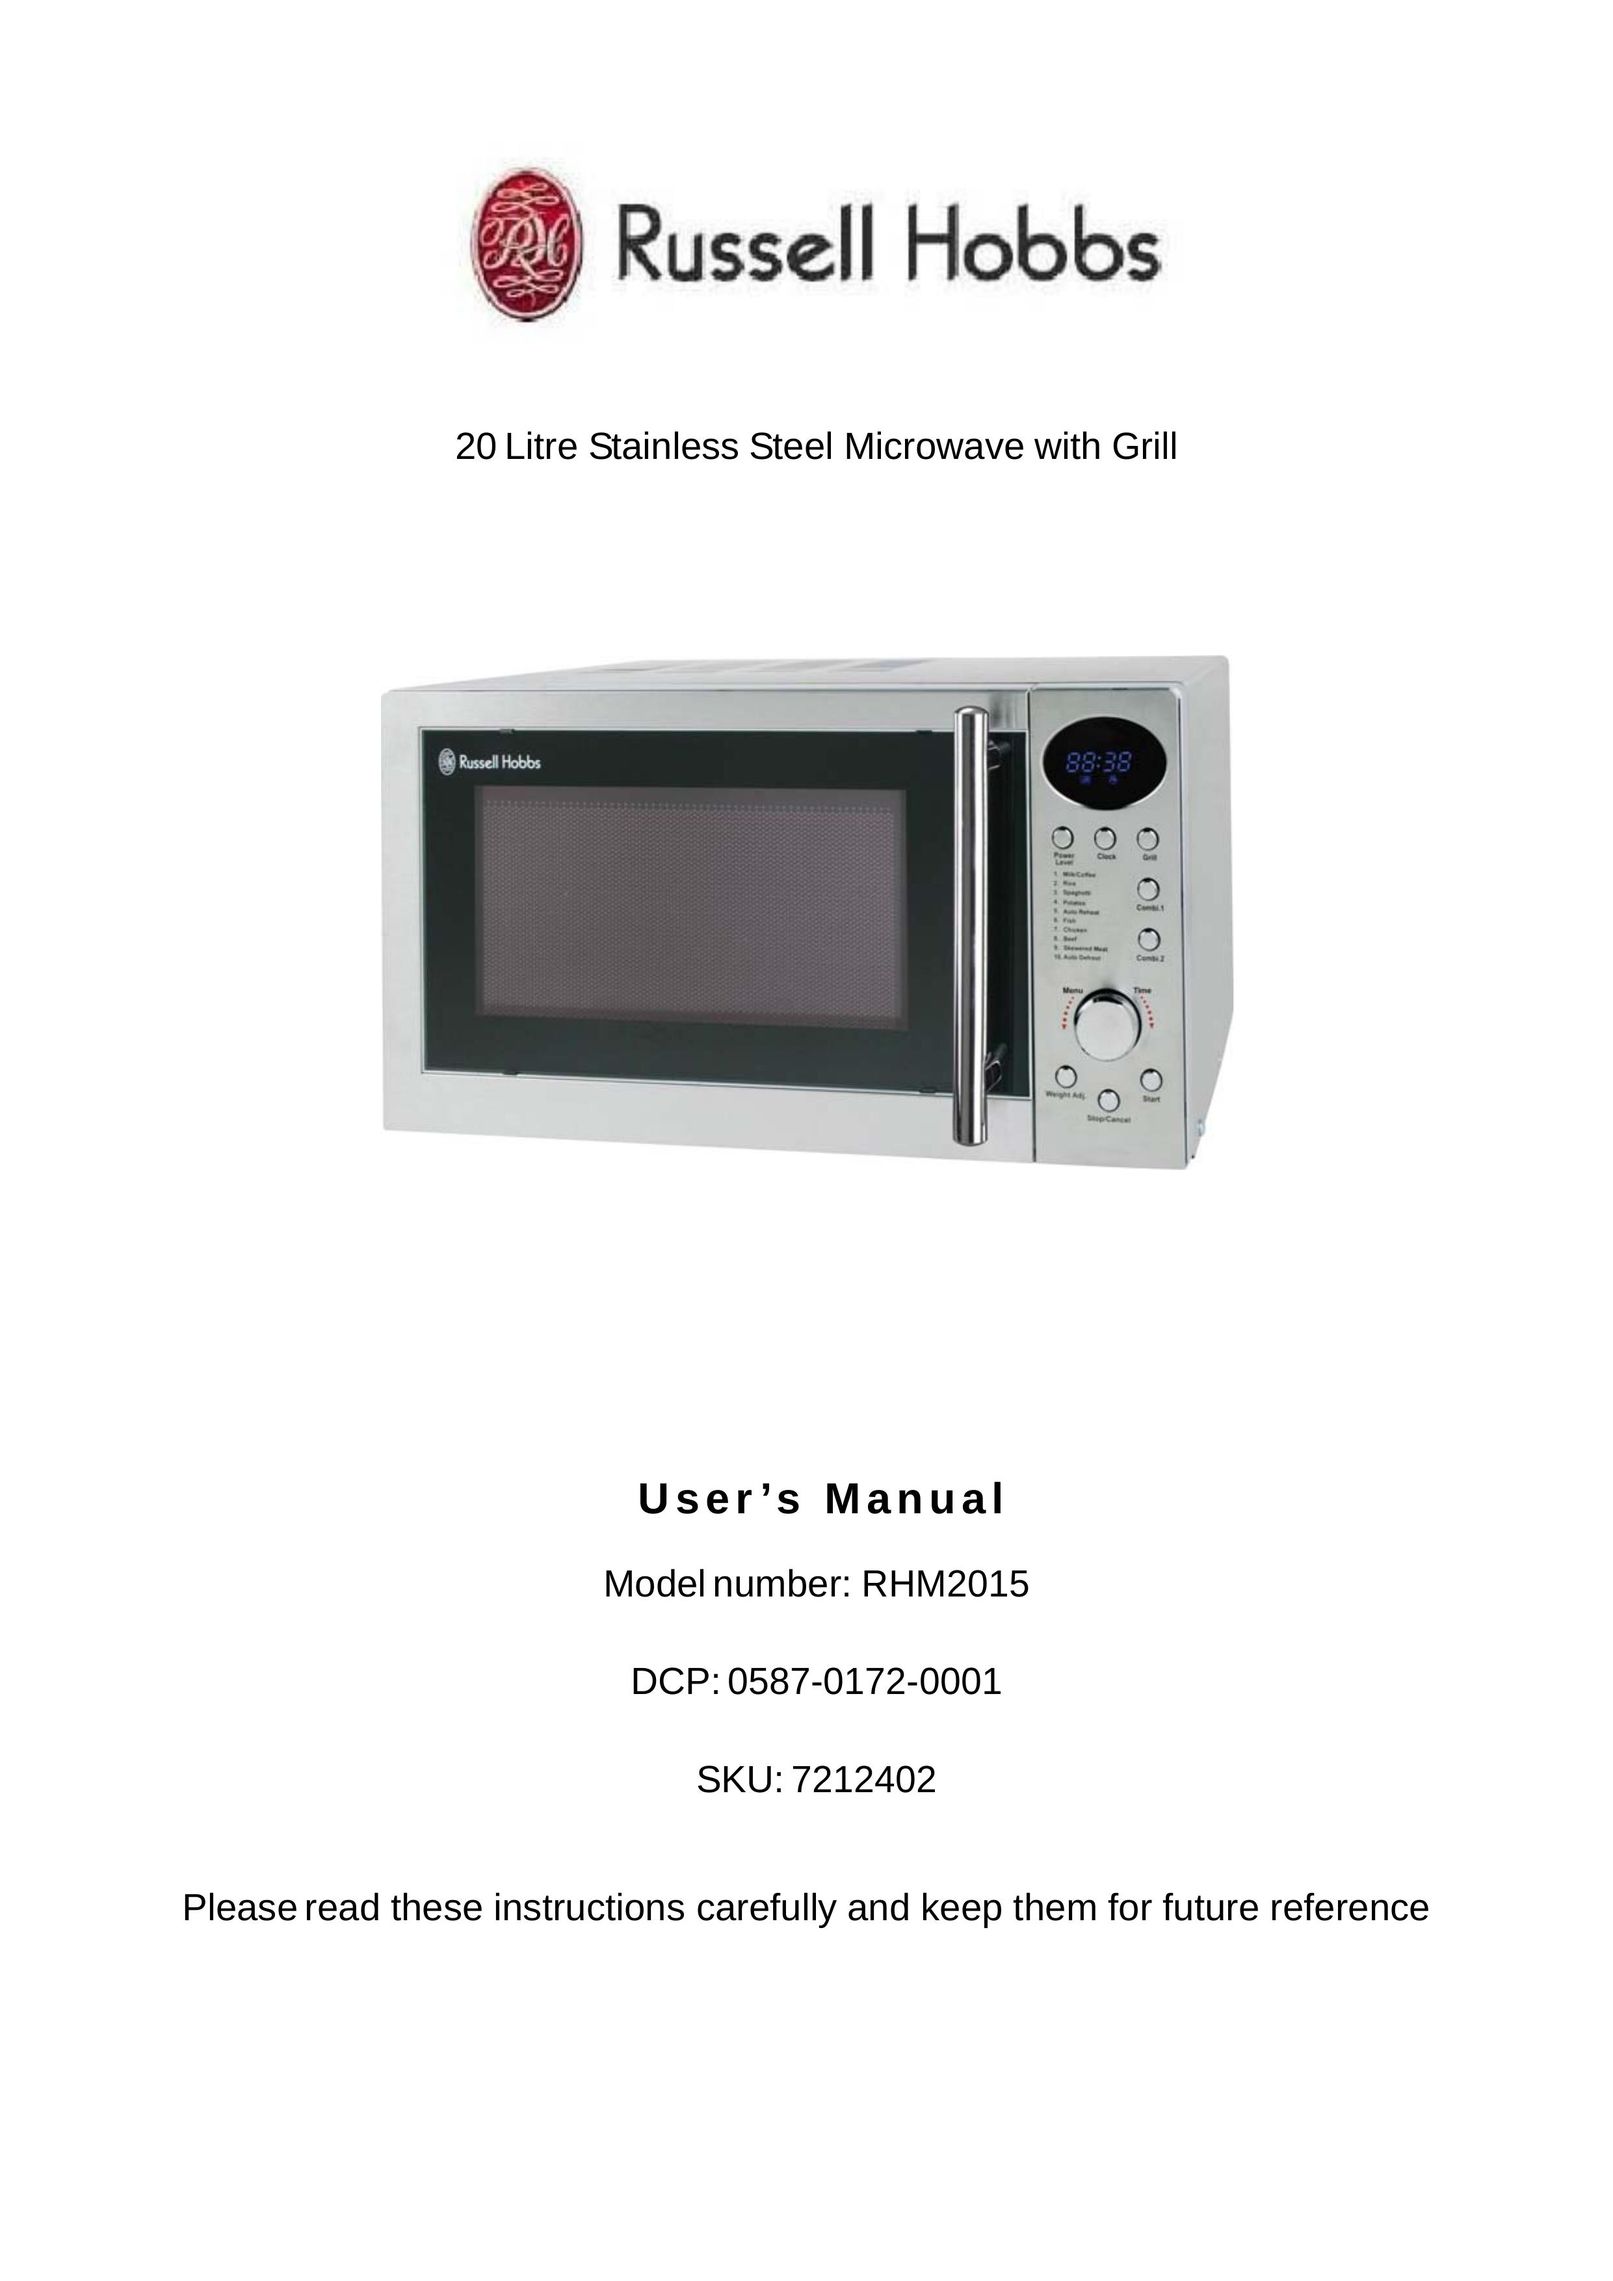 Russell Hobbs RHM2015 Microwave Oven User Manual